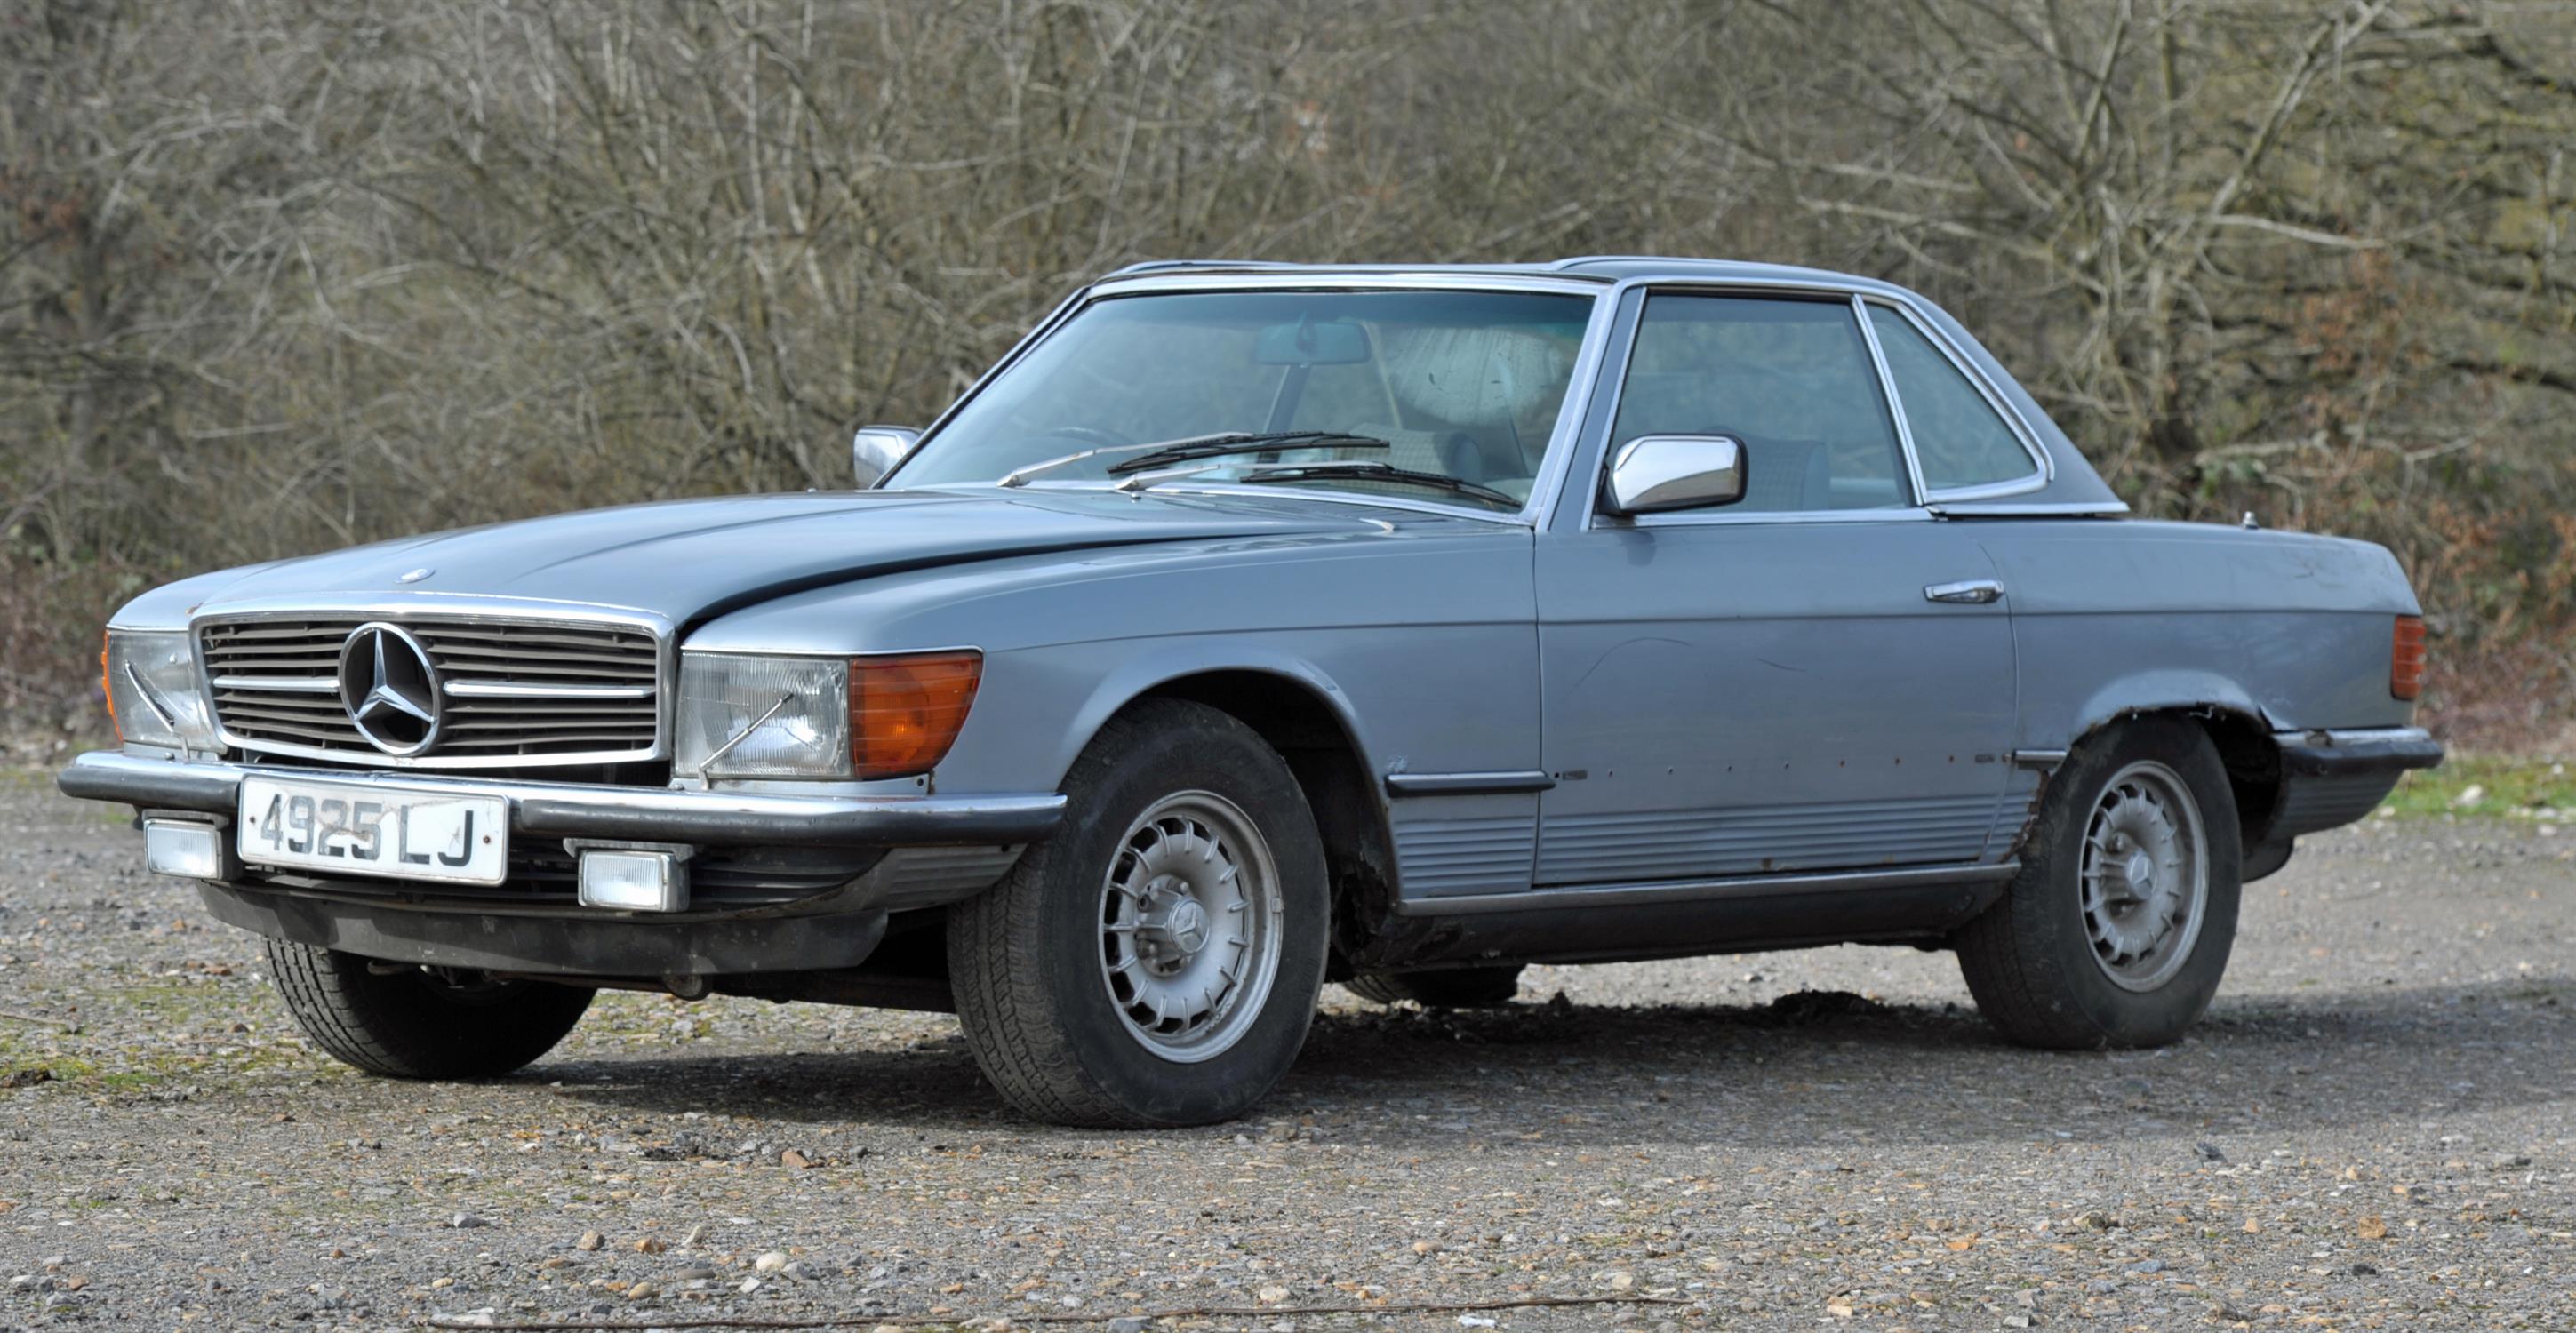 1981 Mercedes 380 SL R107 Automatic Petrol Convertible. Registration number: 4925 LJ. - Image 4 of 14